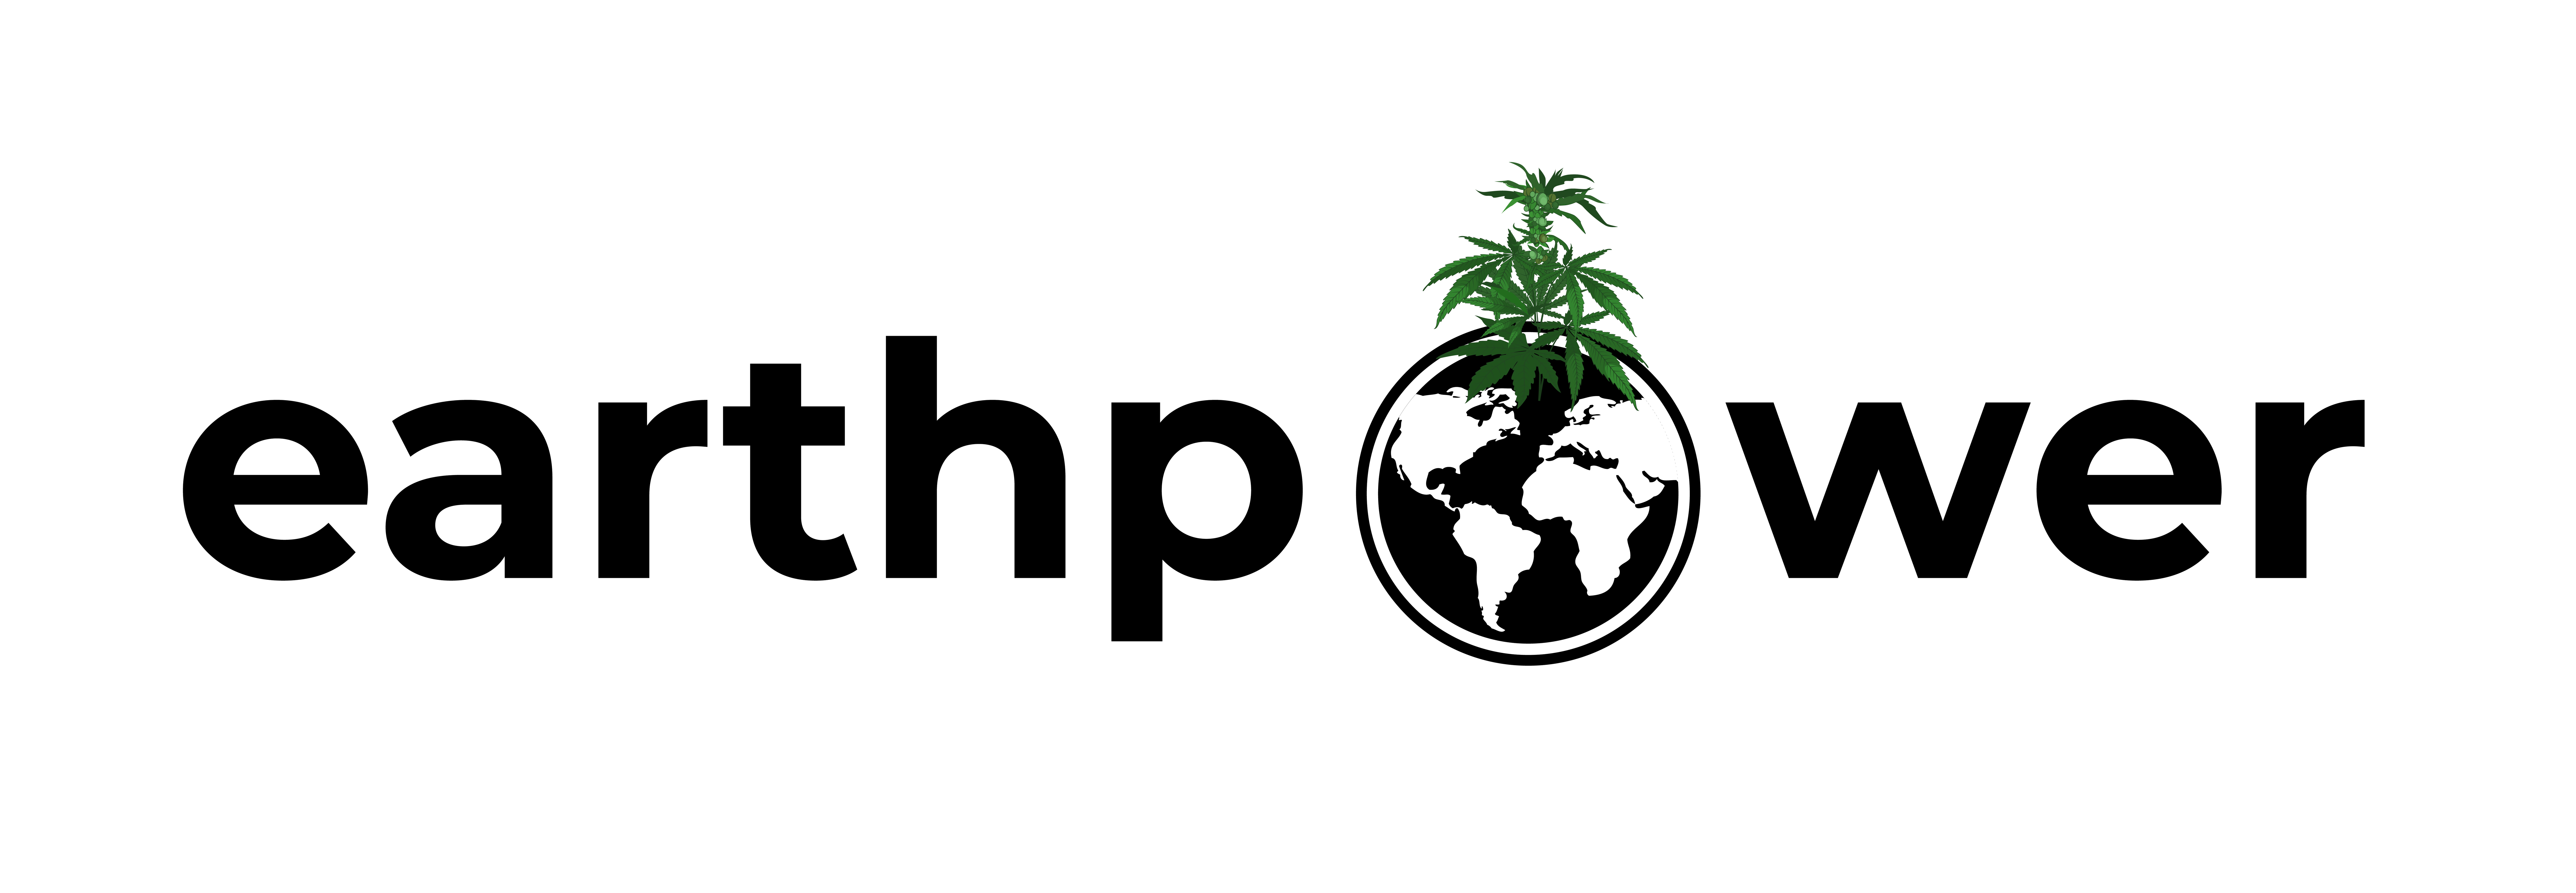 earthpower-logo